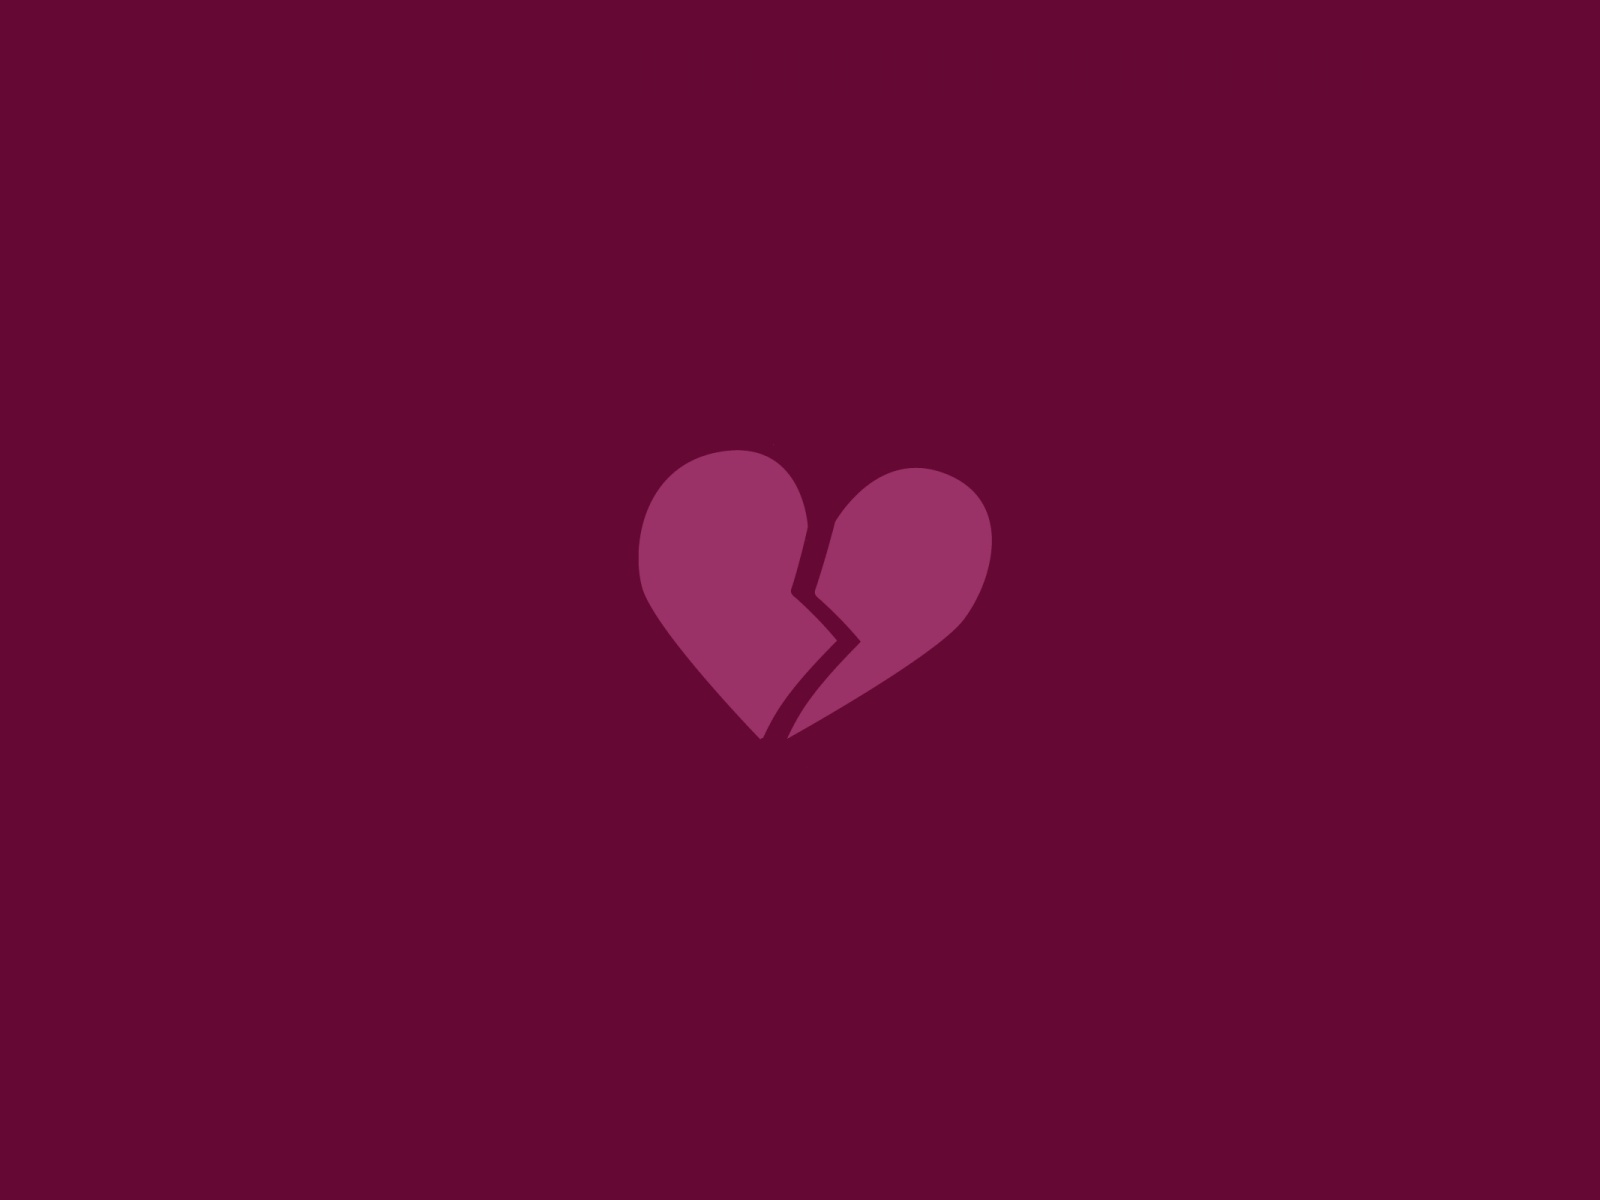 Broken Heart Wallpaper Download - Heart - HD Wallpaper 